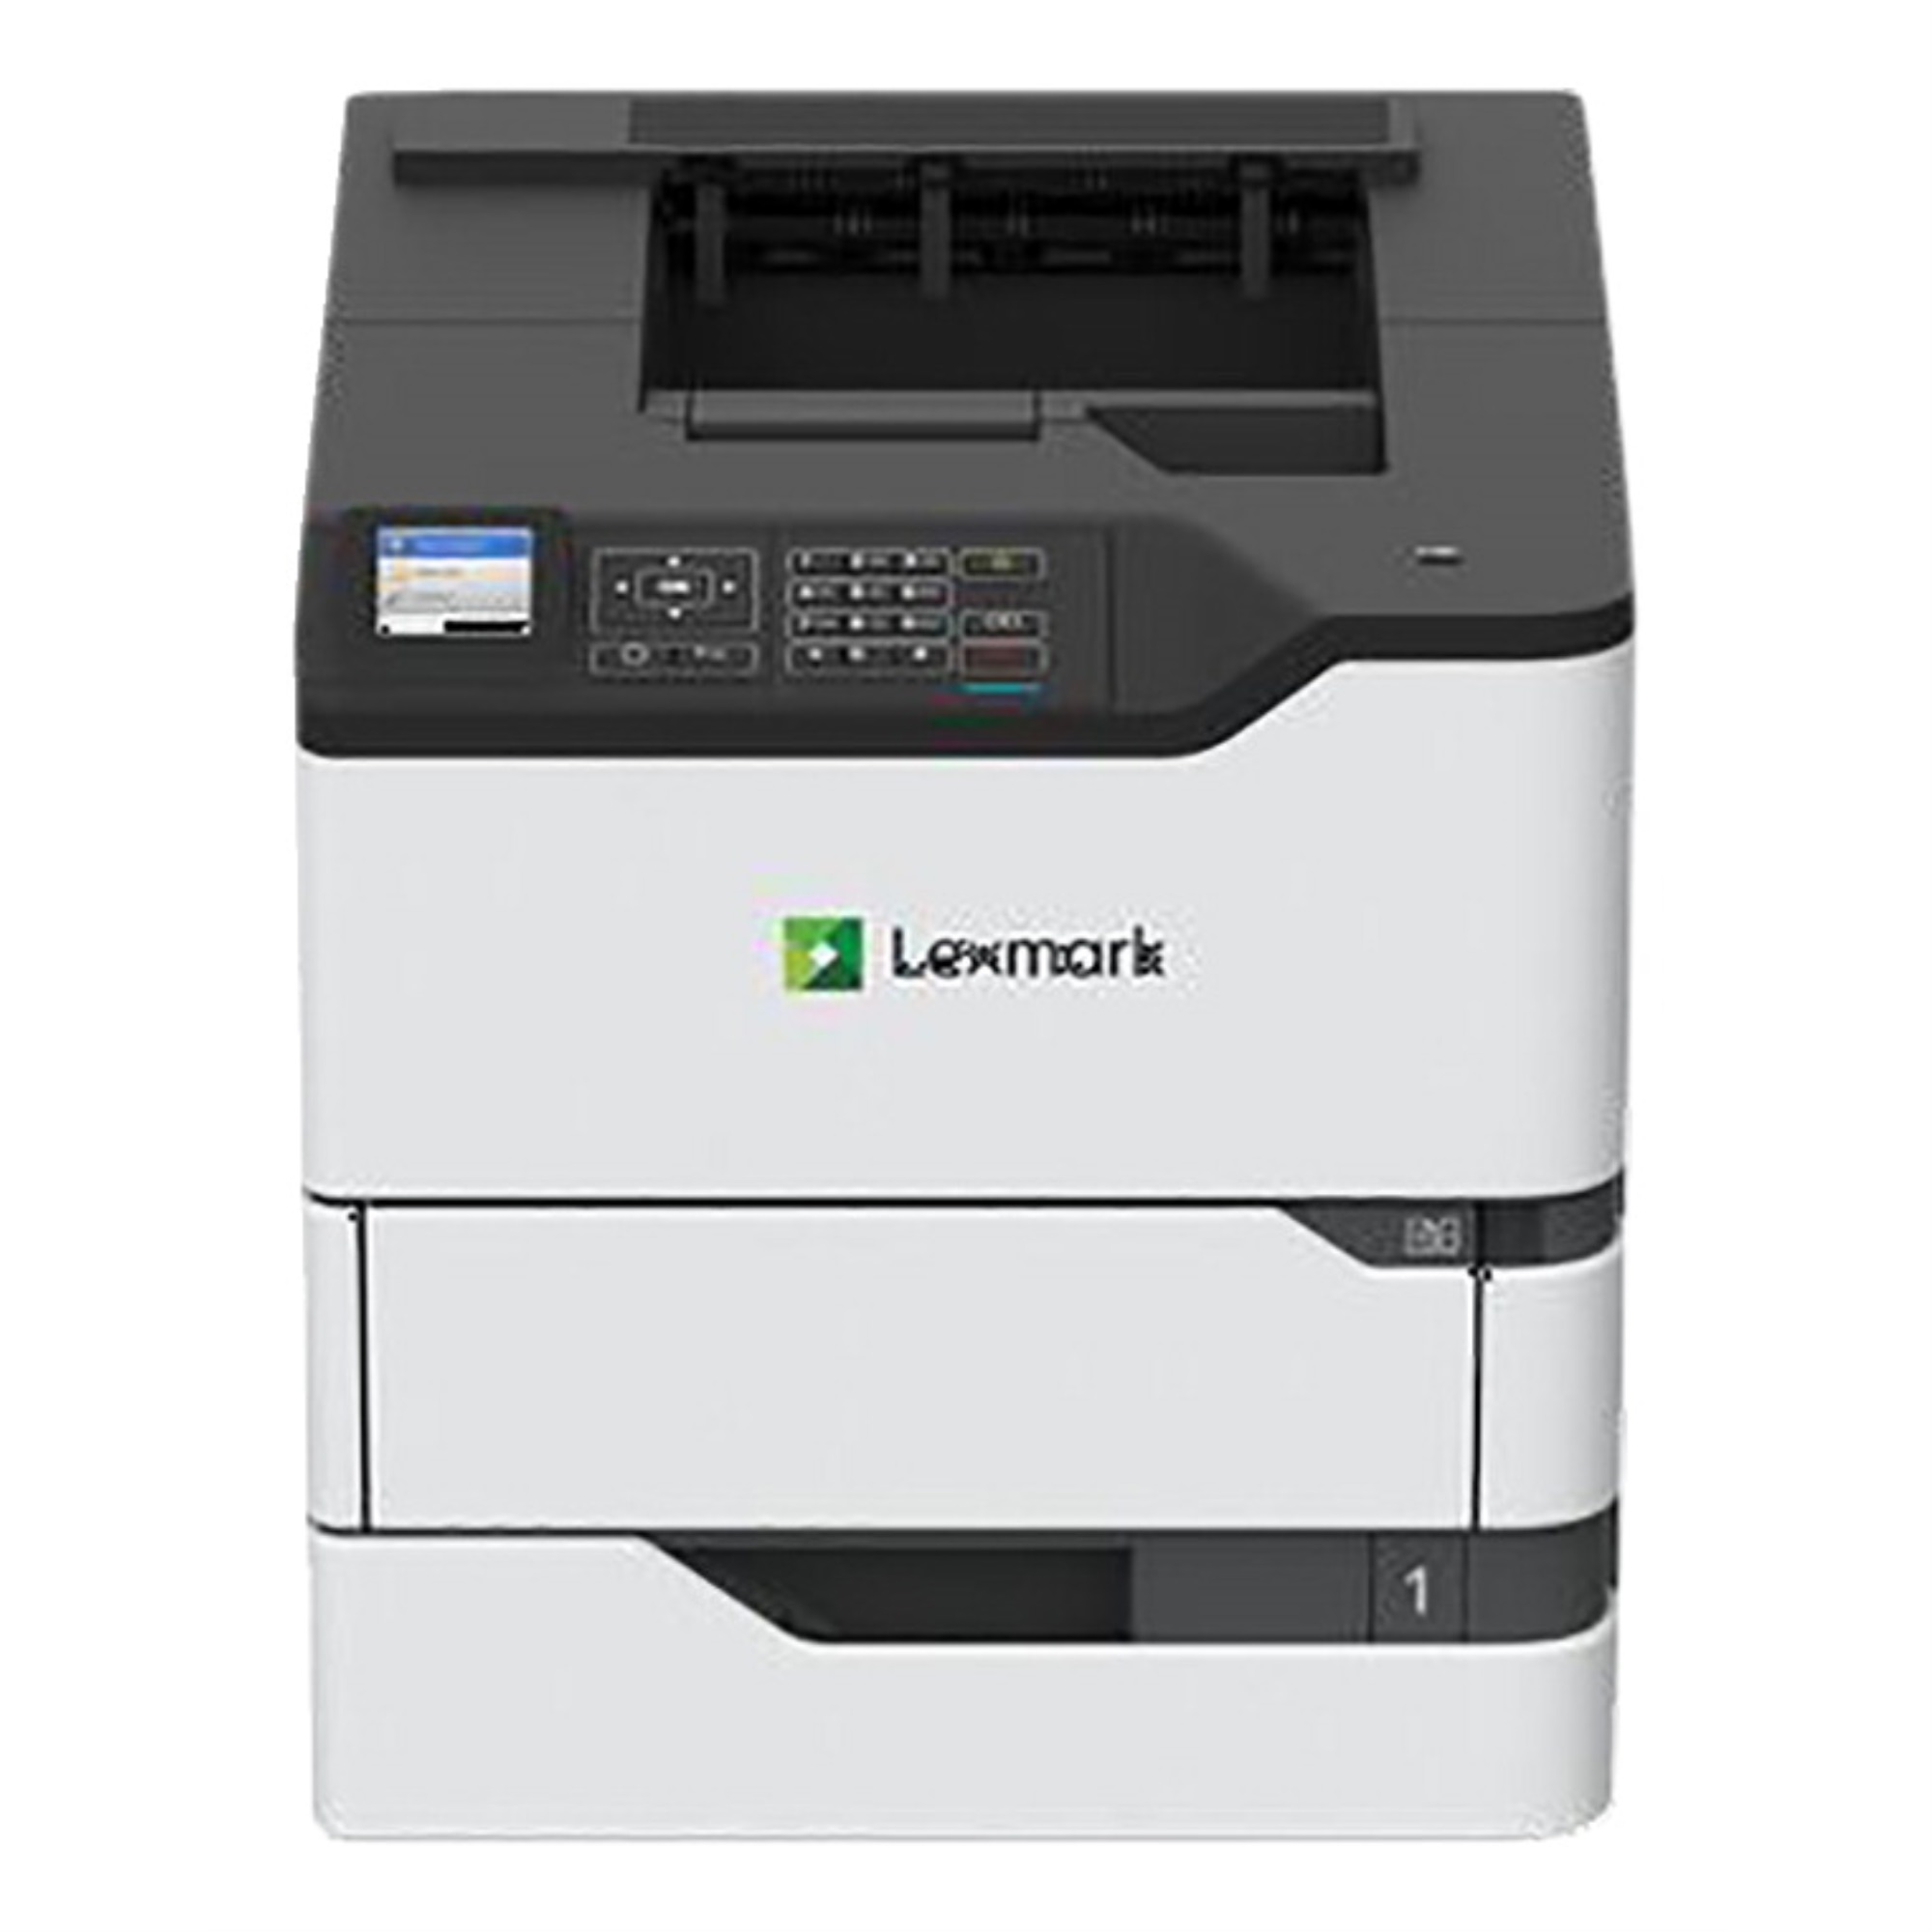 Lexmark MS725DNV Monochrome Laser Printer